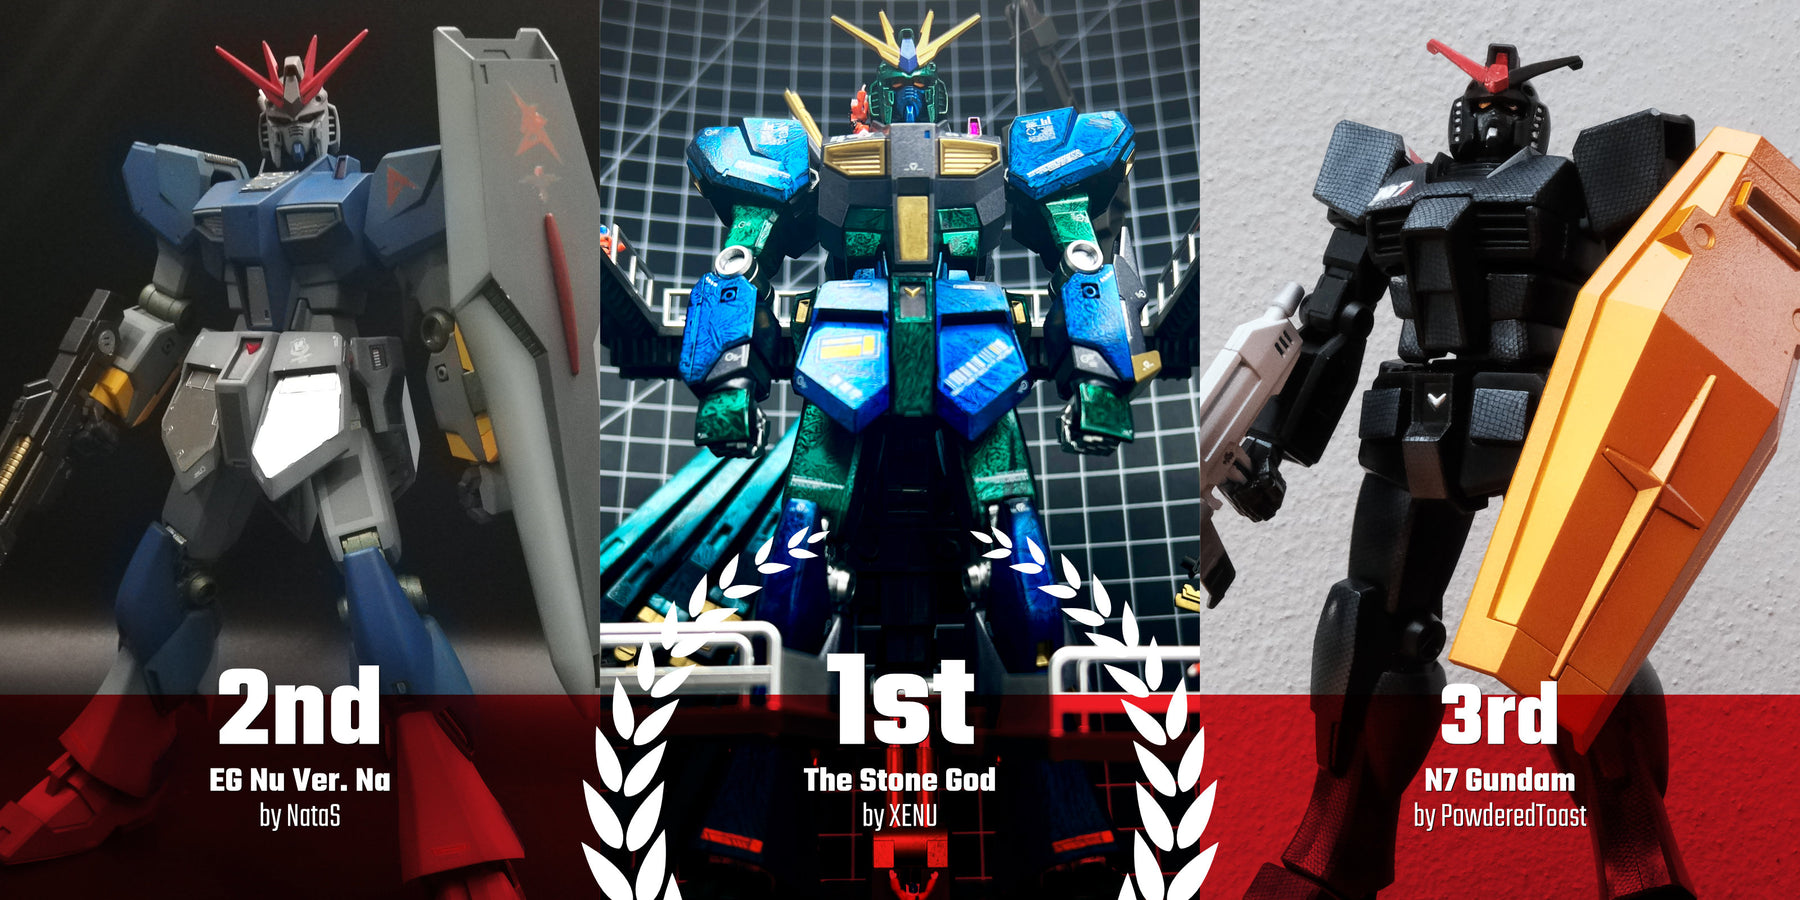 Entries & Winners from Entry Grade Gundam BuildJam!